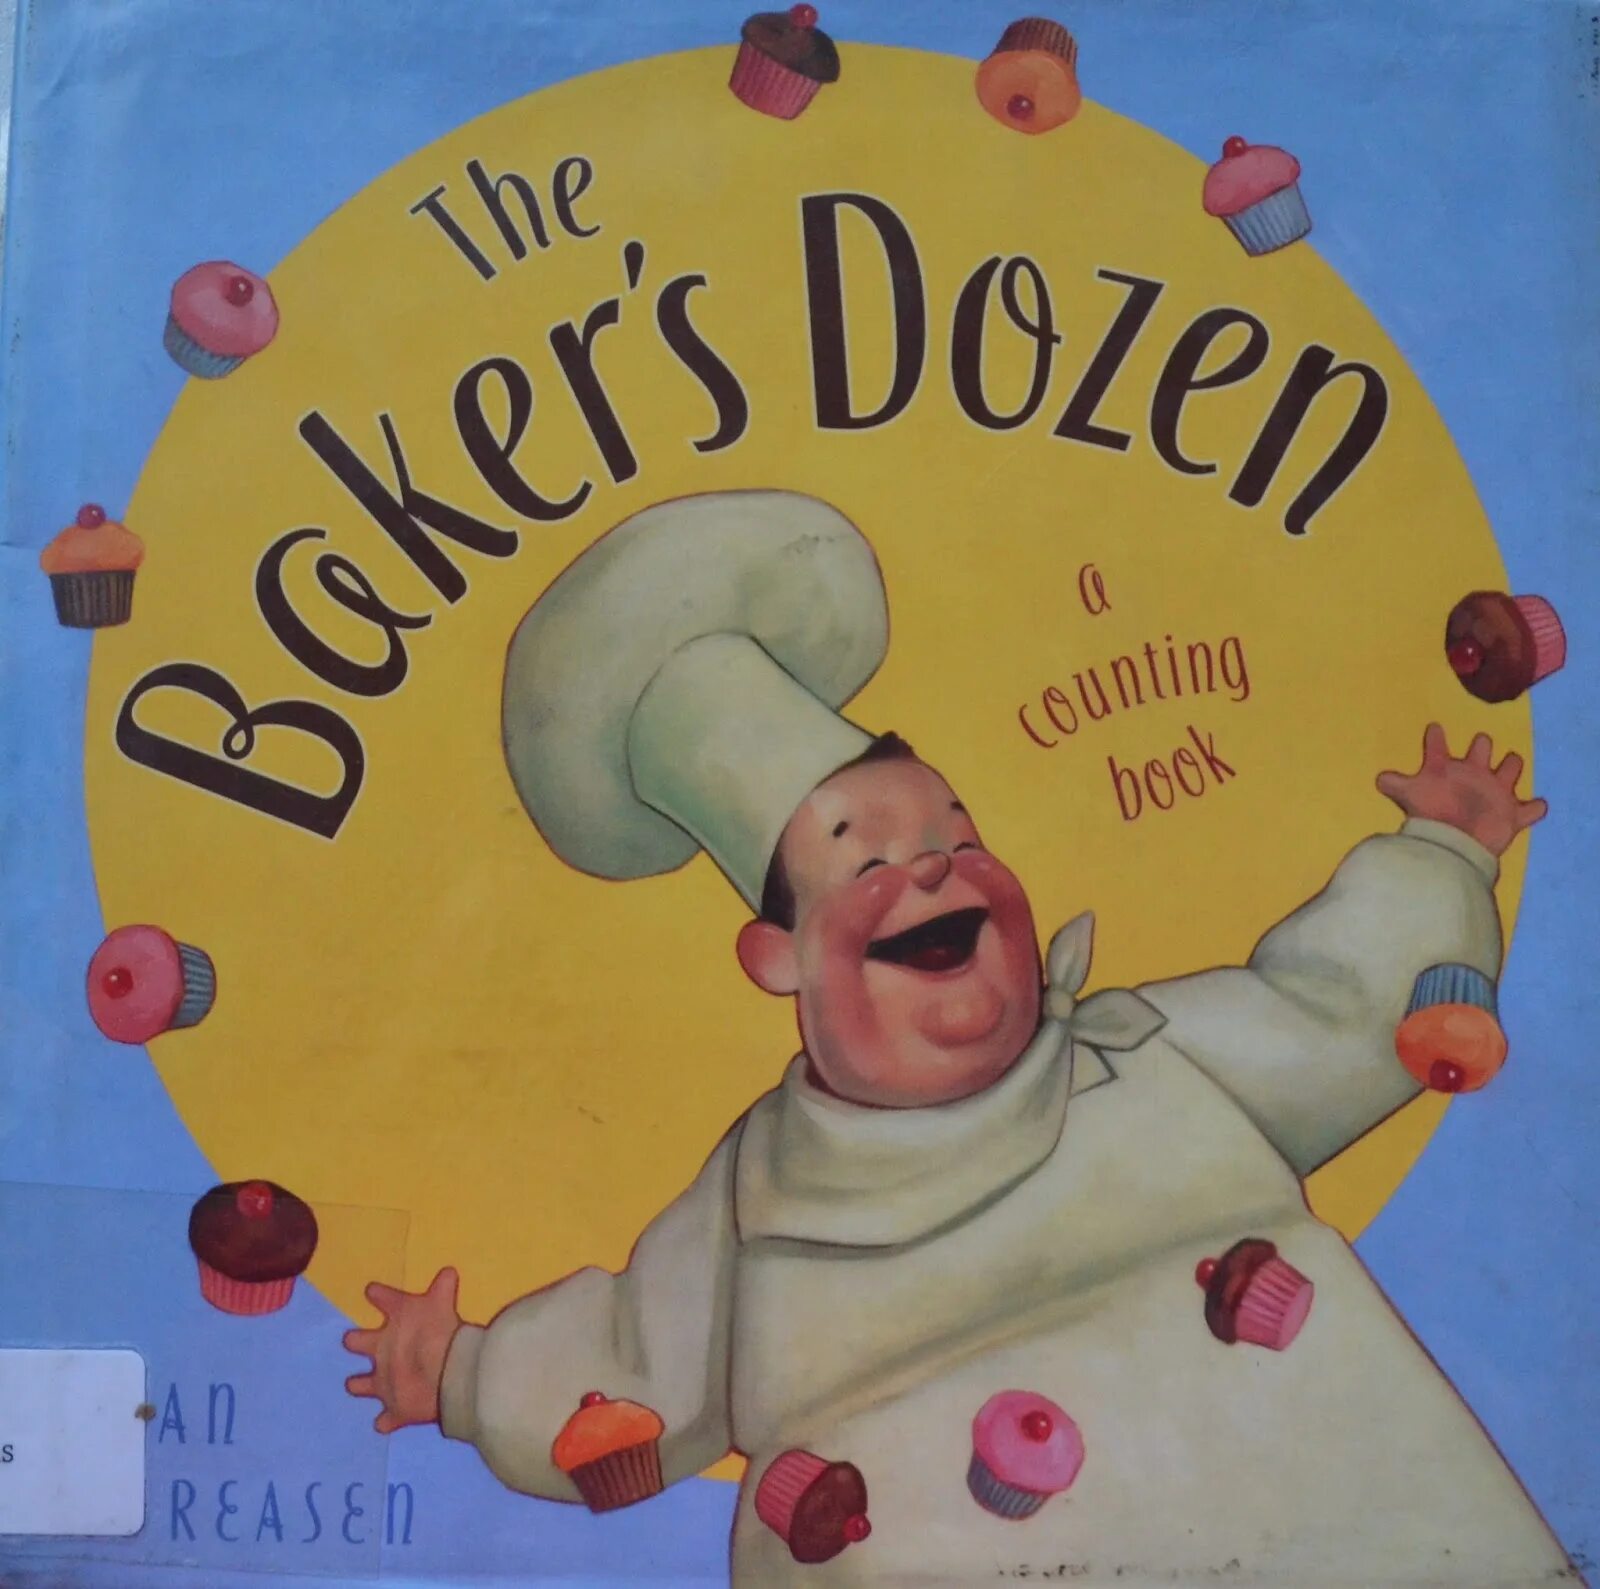 It s the good book. Сказка "the Baker s dozen". Paul King - a Baker's dozen (2020). Dozen перевод. Сказка "the Baker s dozen" текст и перевод.